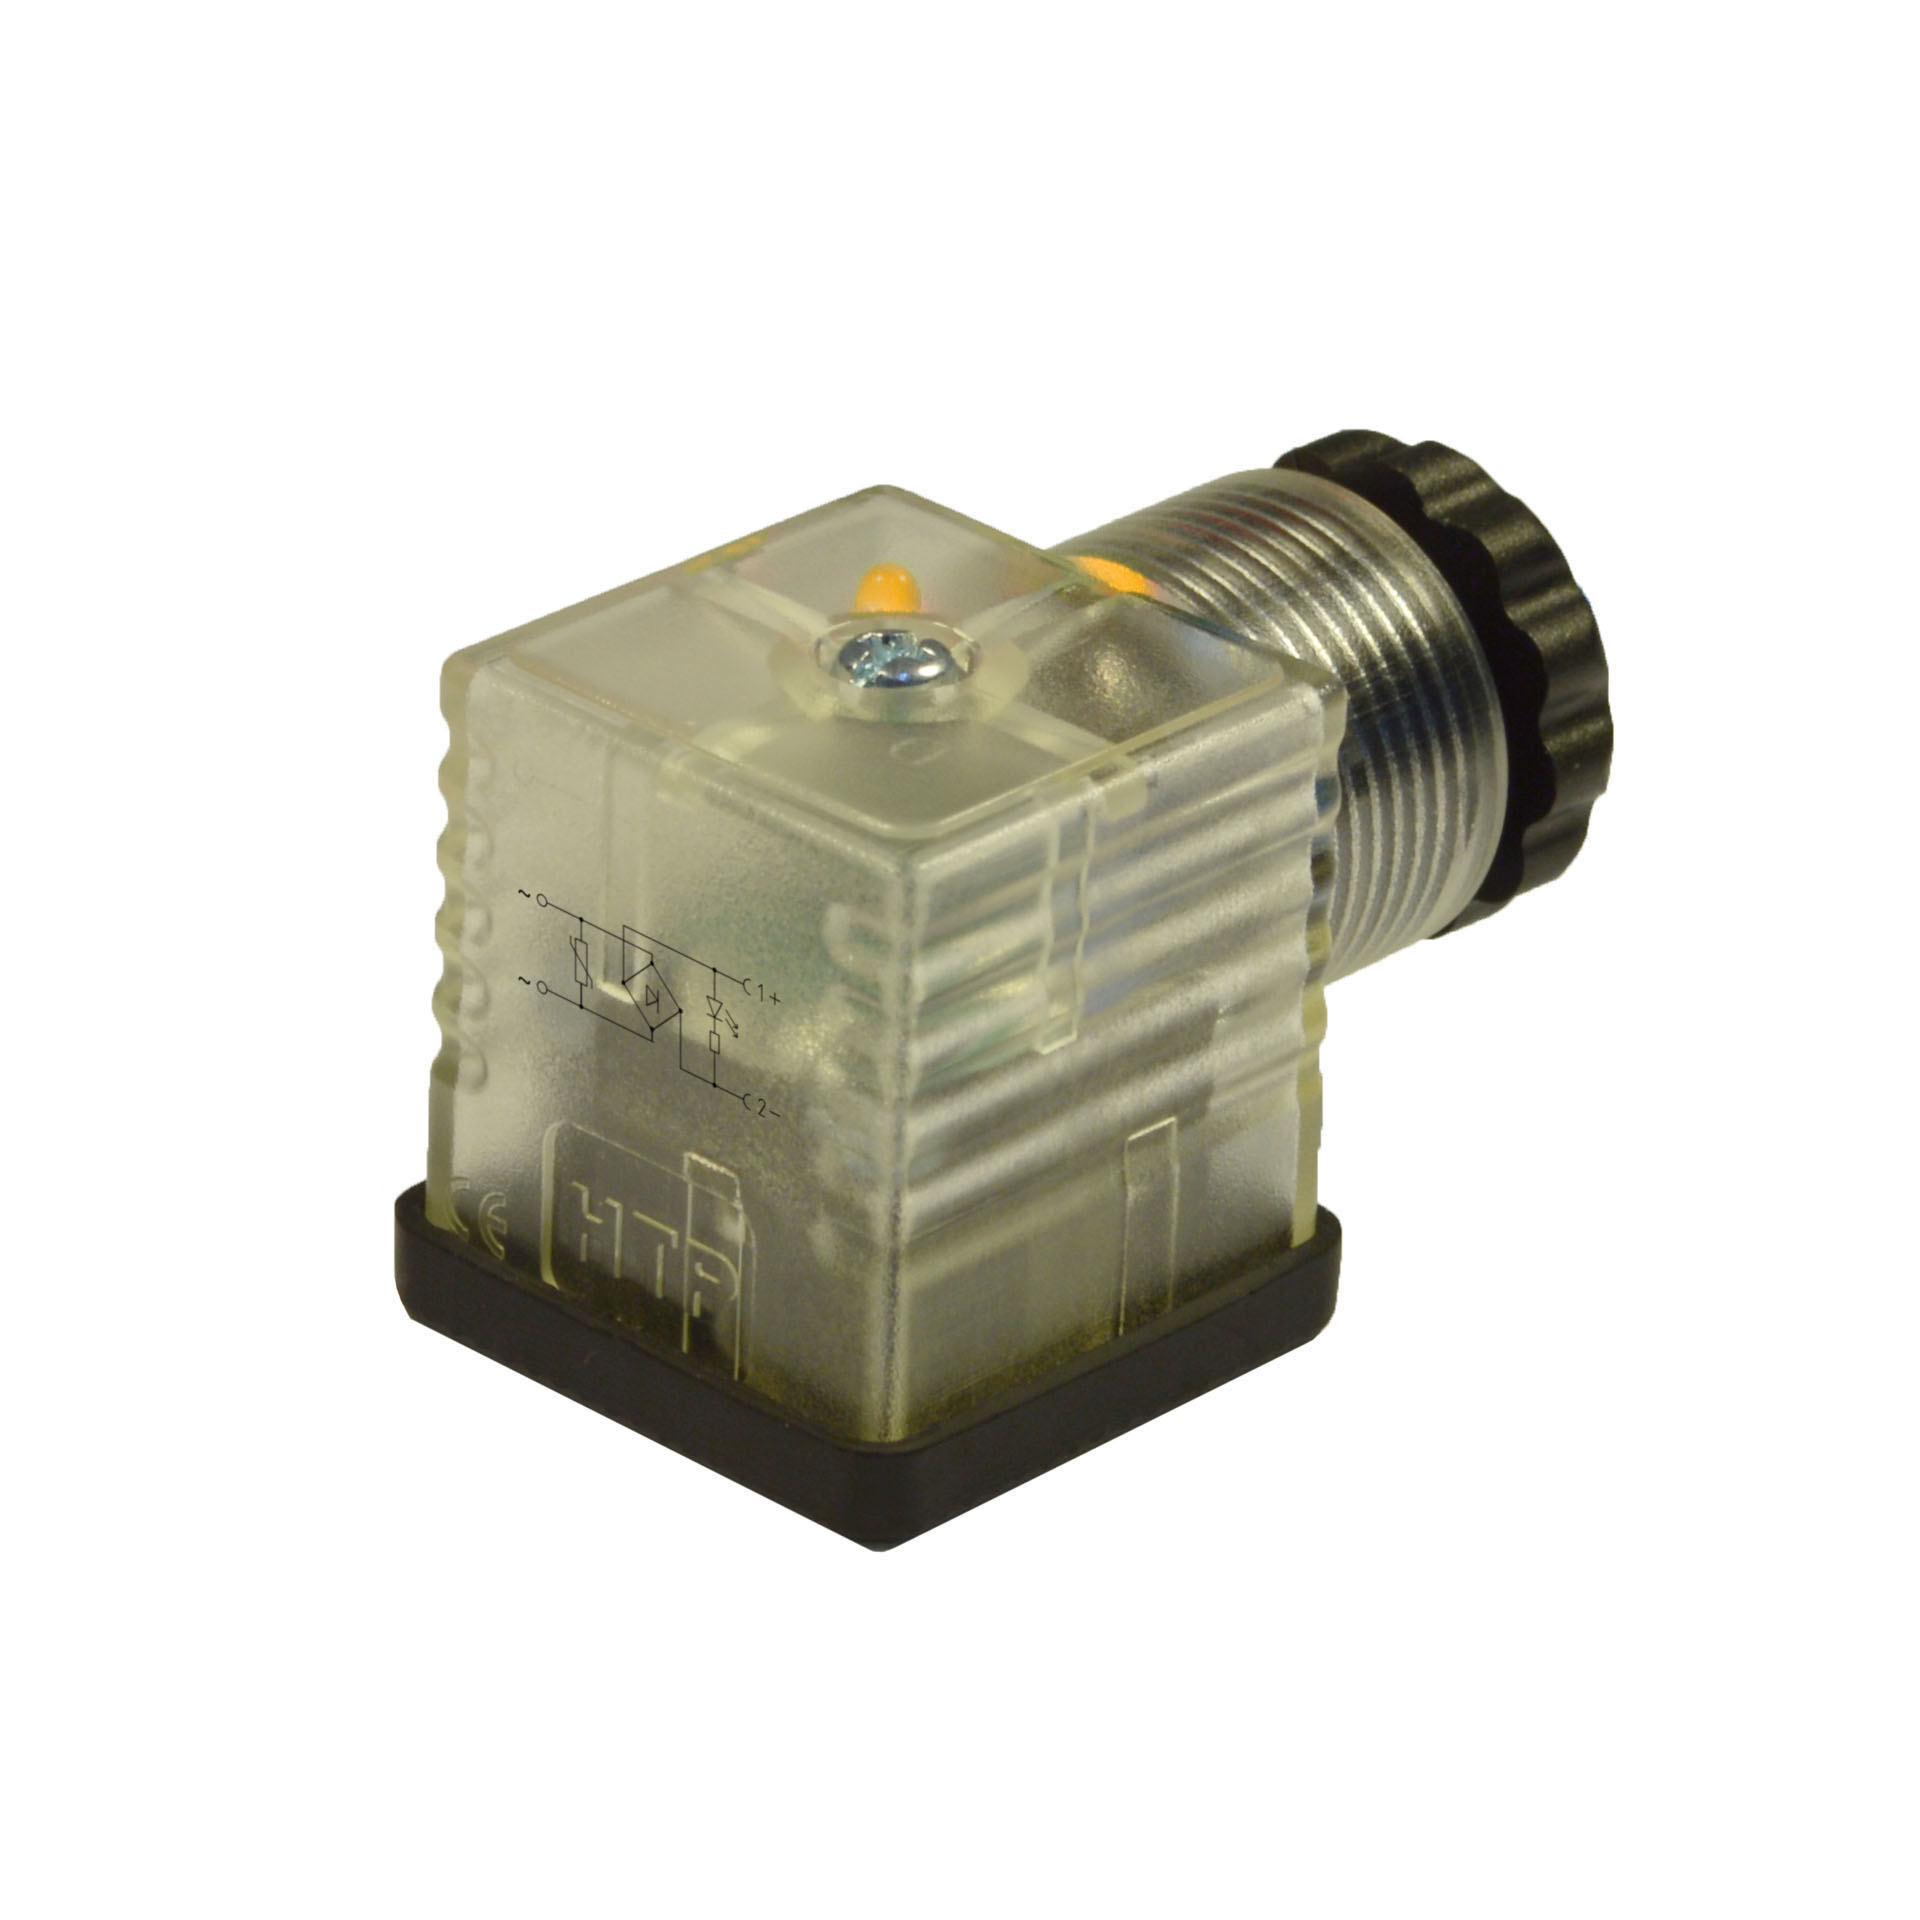 EN175301-803(typeA)field attachable,2p+PE(h.12),Yellow LED+vdr+rectifier,24VAC,PG9/11unif.